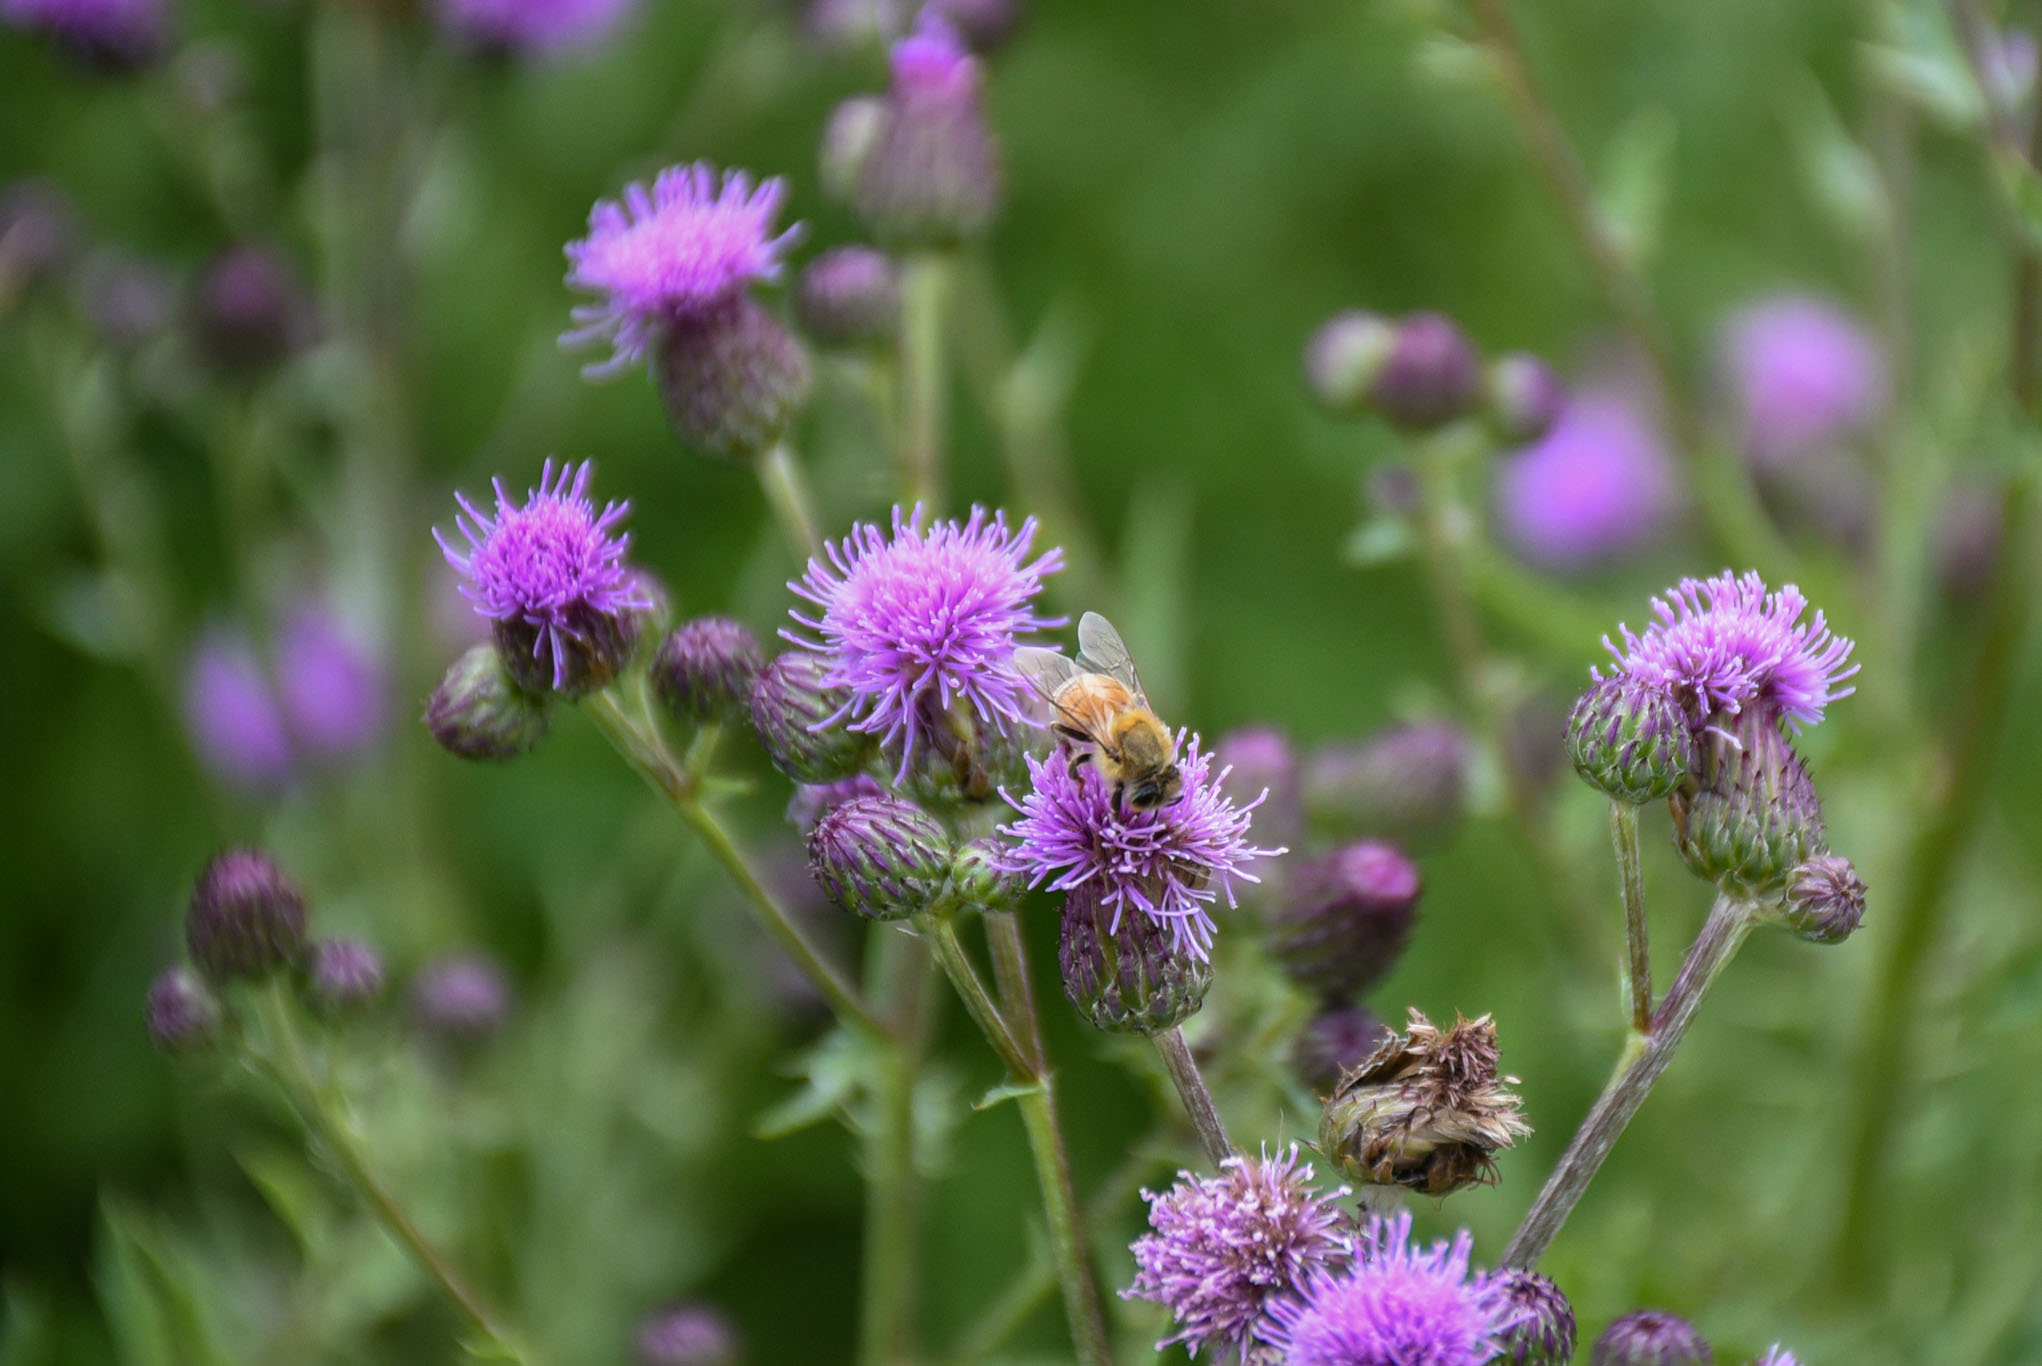 Honeybees fly around flowers collecting pollen.